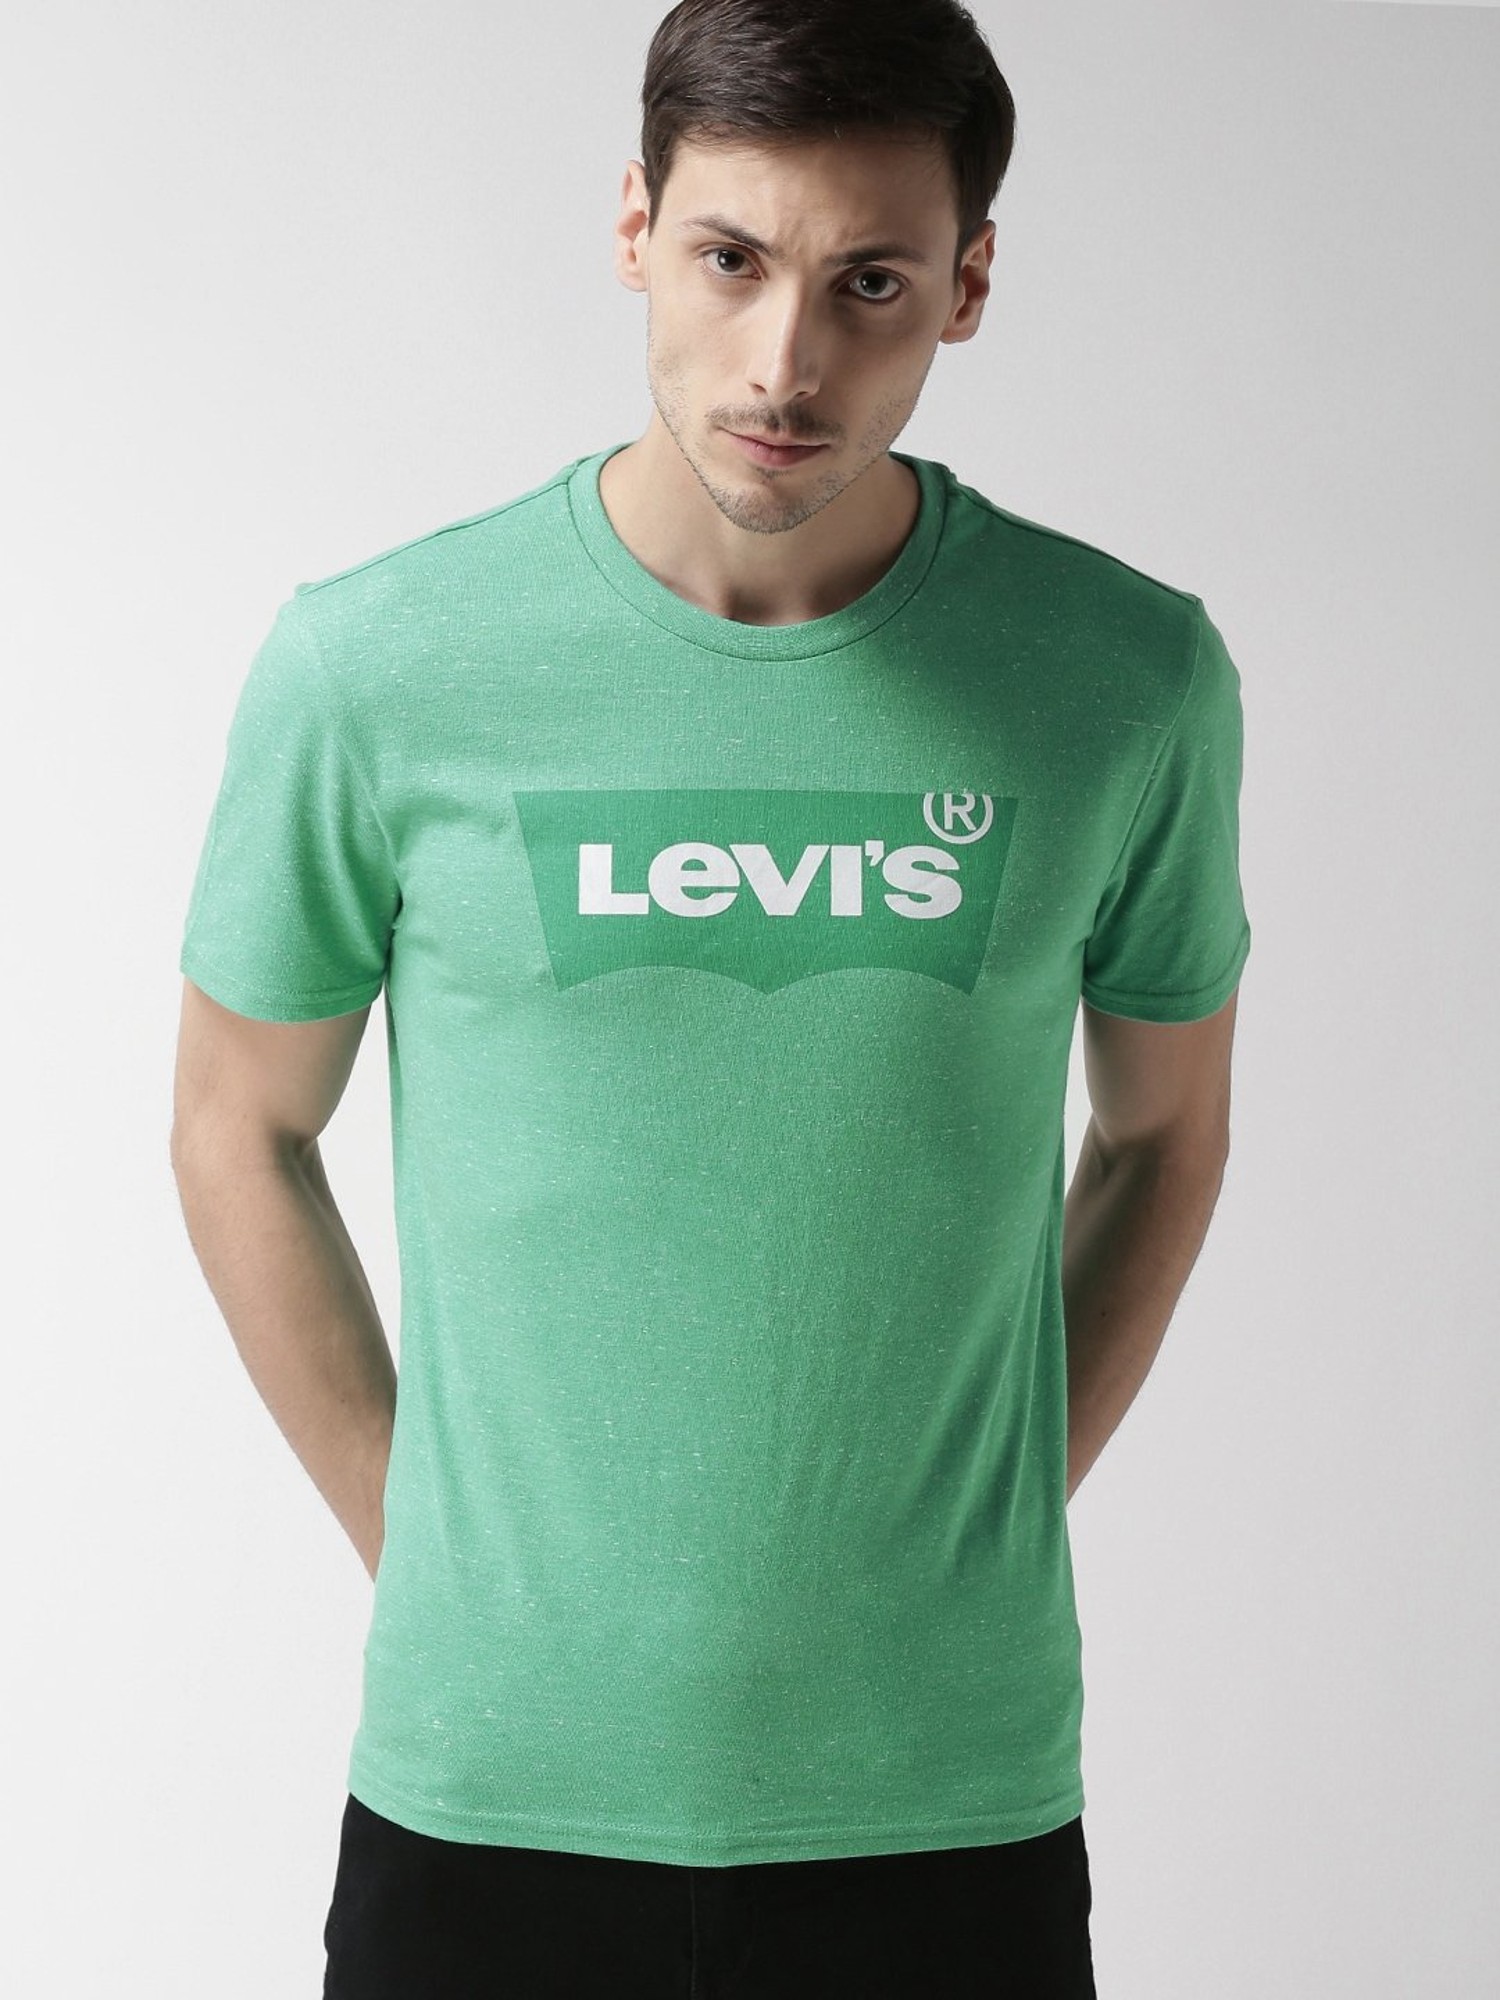 Buy Levis Green Logo Printed T-Shirt for Mens Online @ Tata CLiQ